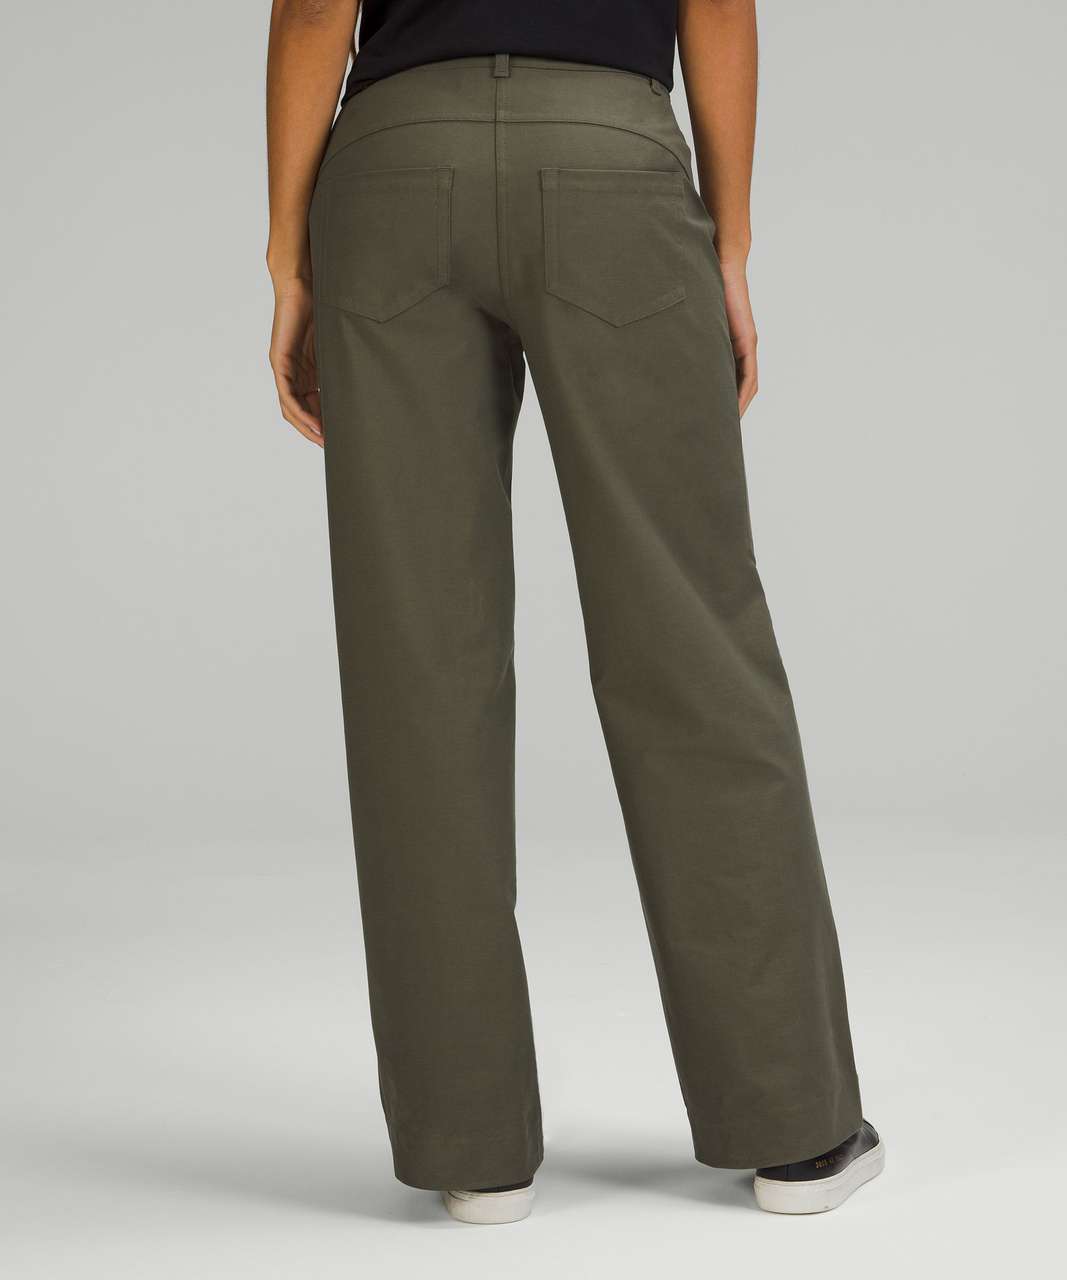 Lululemon City Sleek 5 Pocket Wide-Leg High-Rise Pant *Light Utilitech - Carob Brown